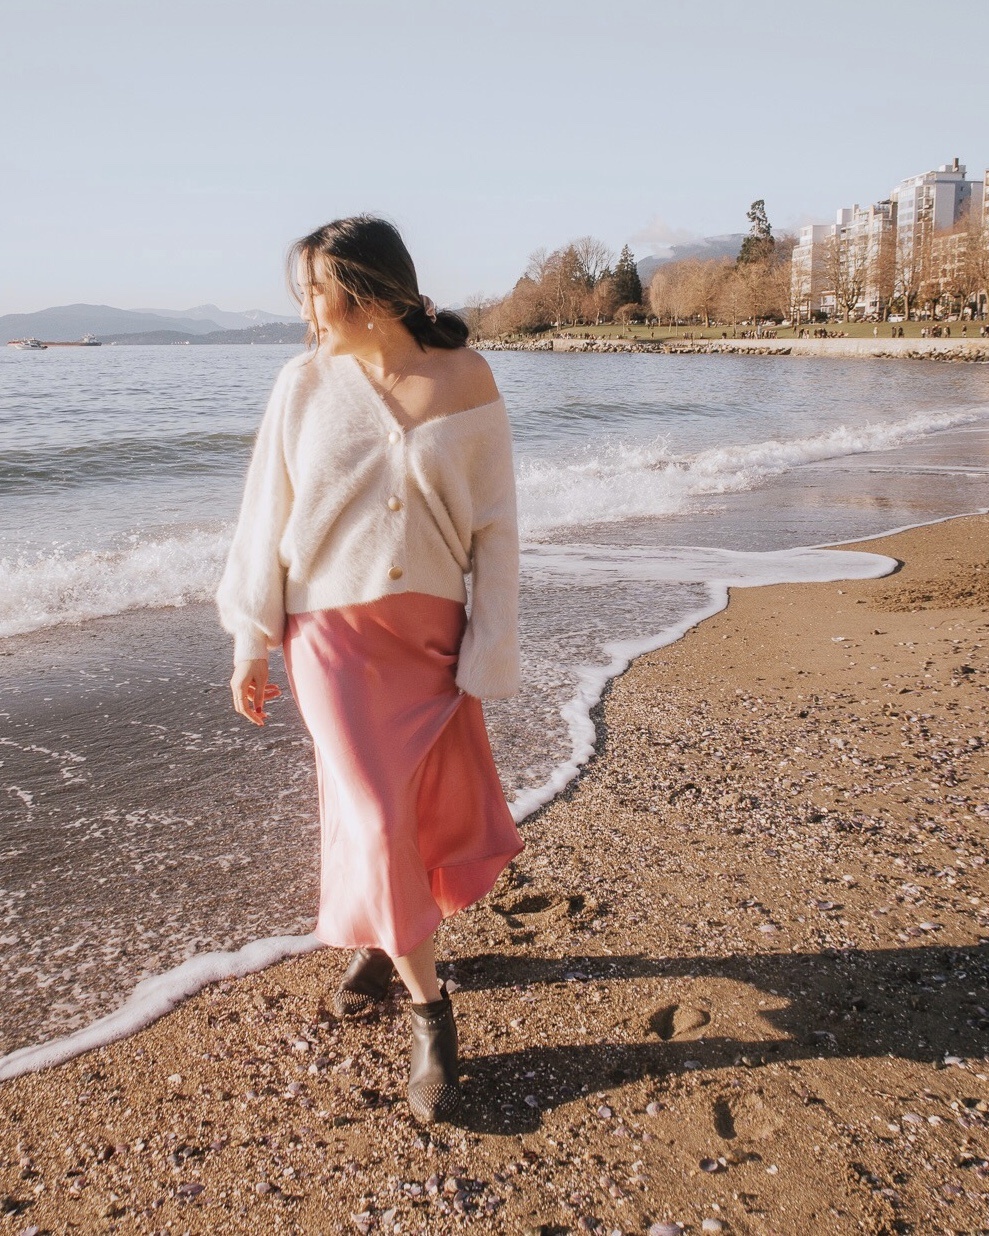 Walking along the beach in a flowy pink skirt